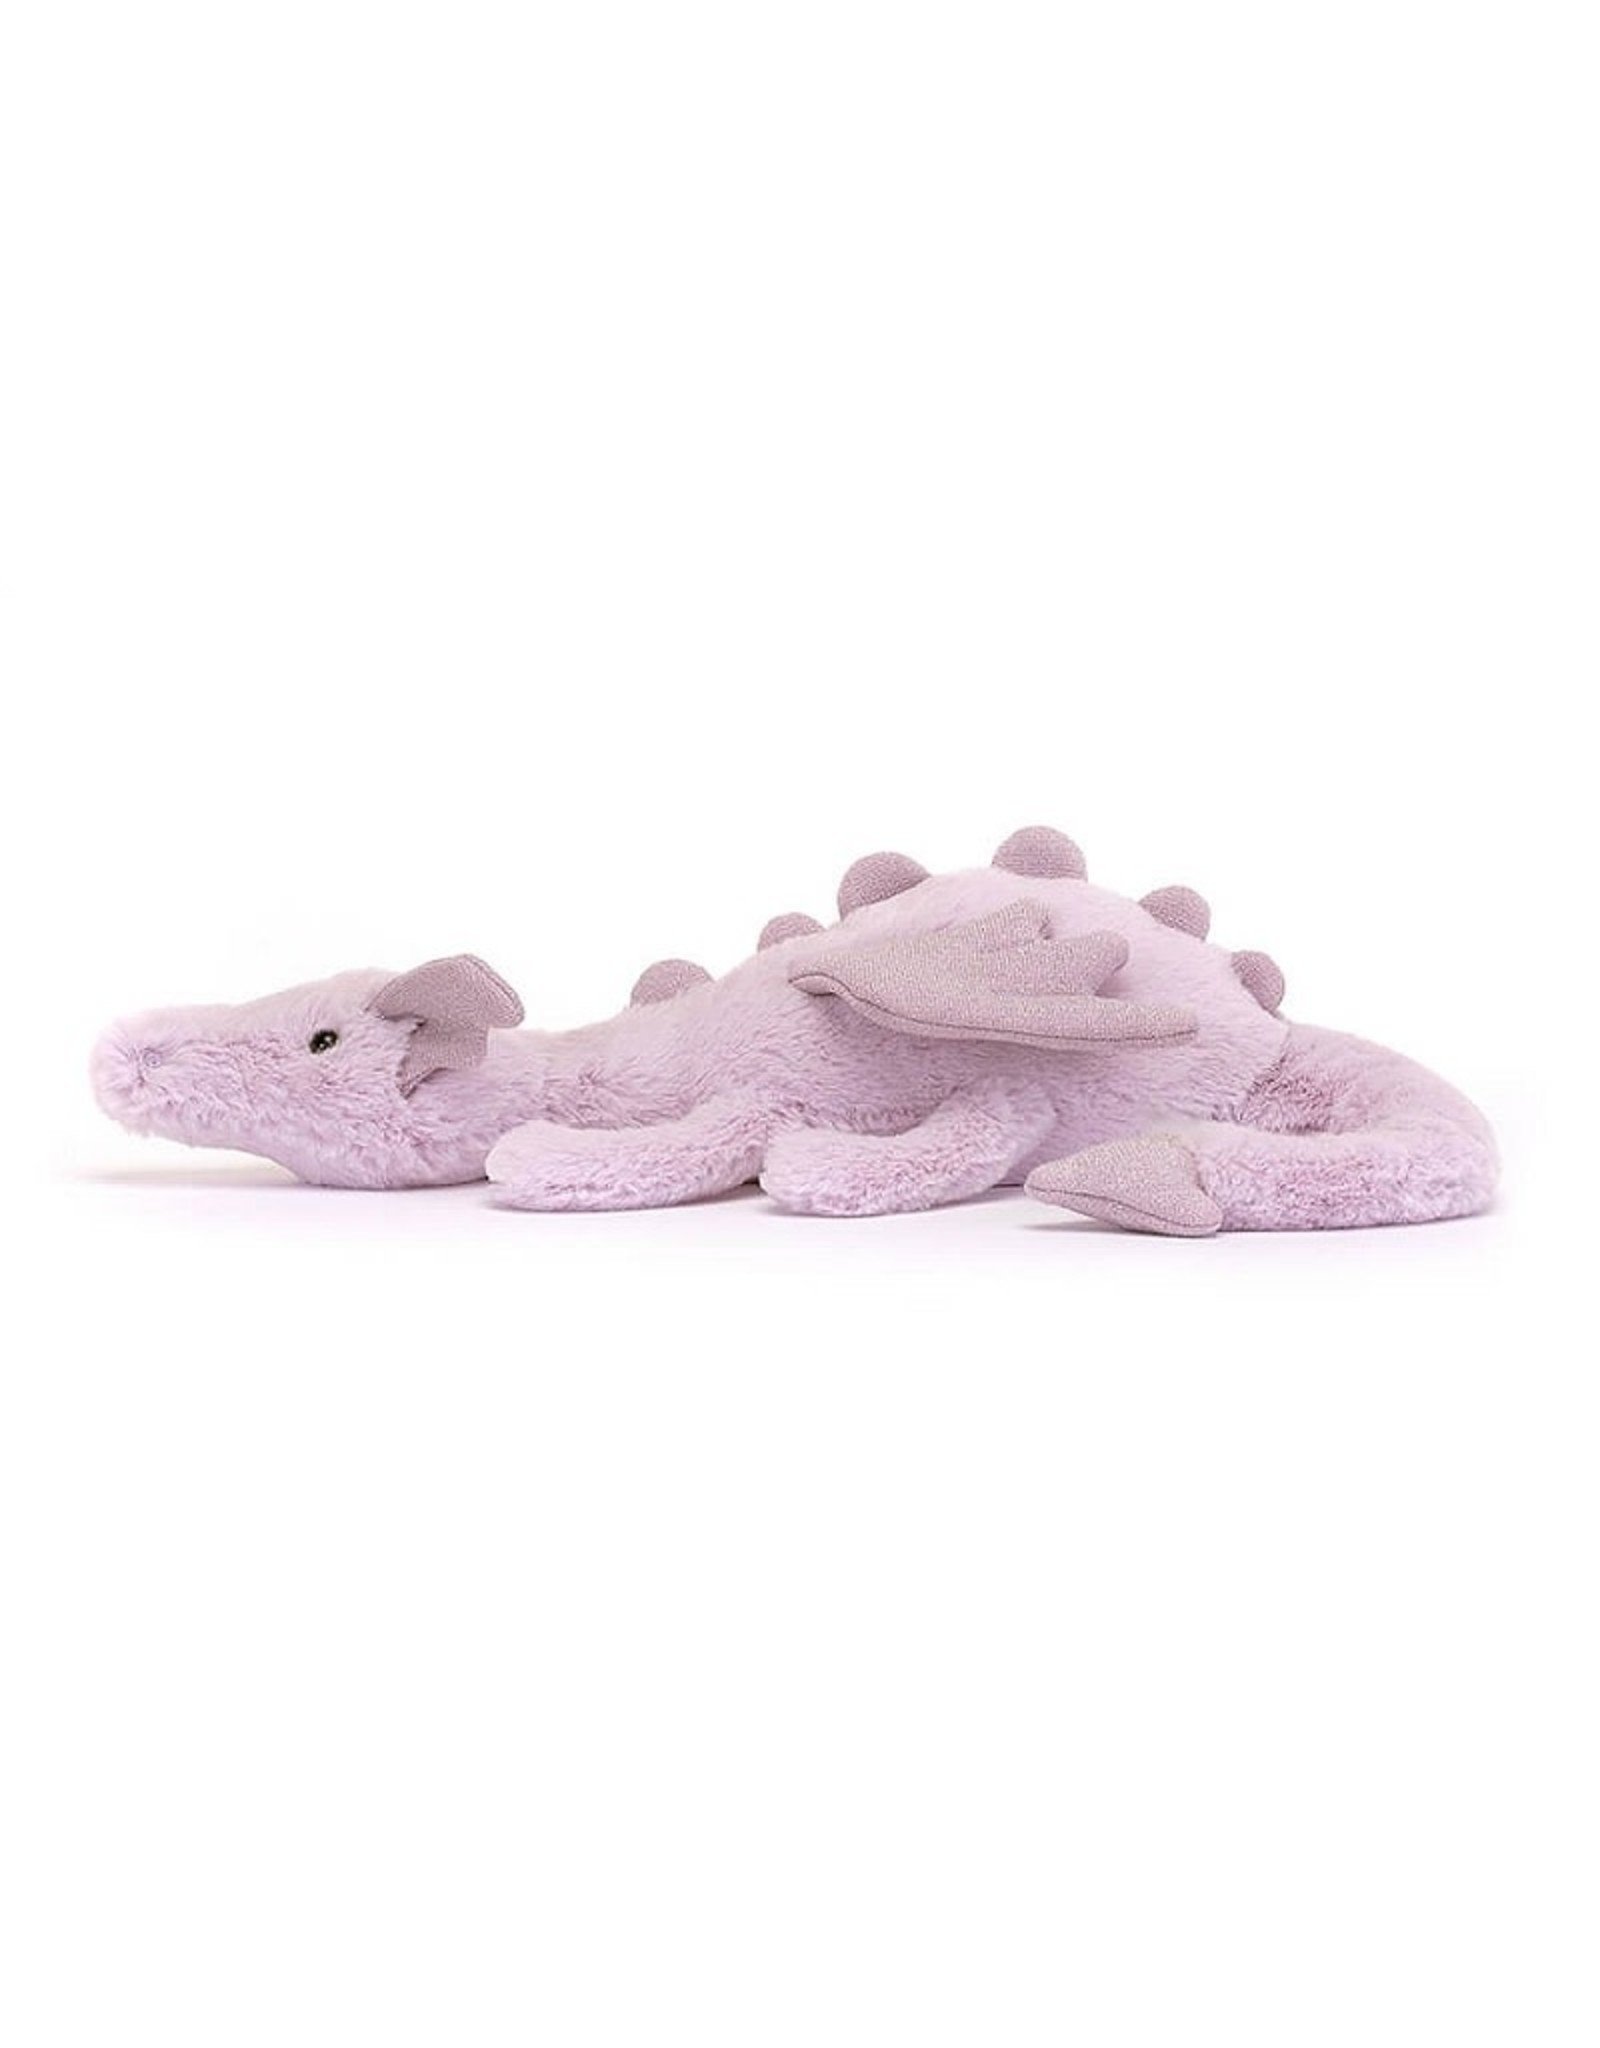 Jellycat Lavender Dragon Little